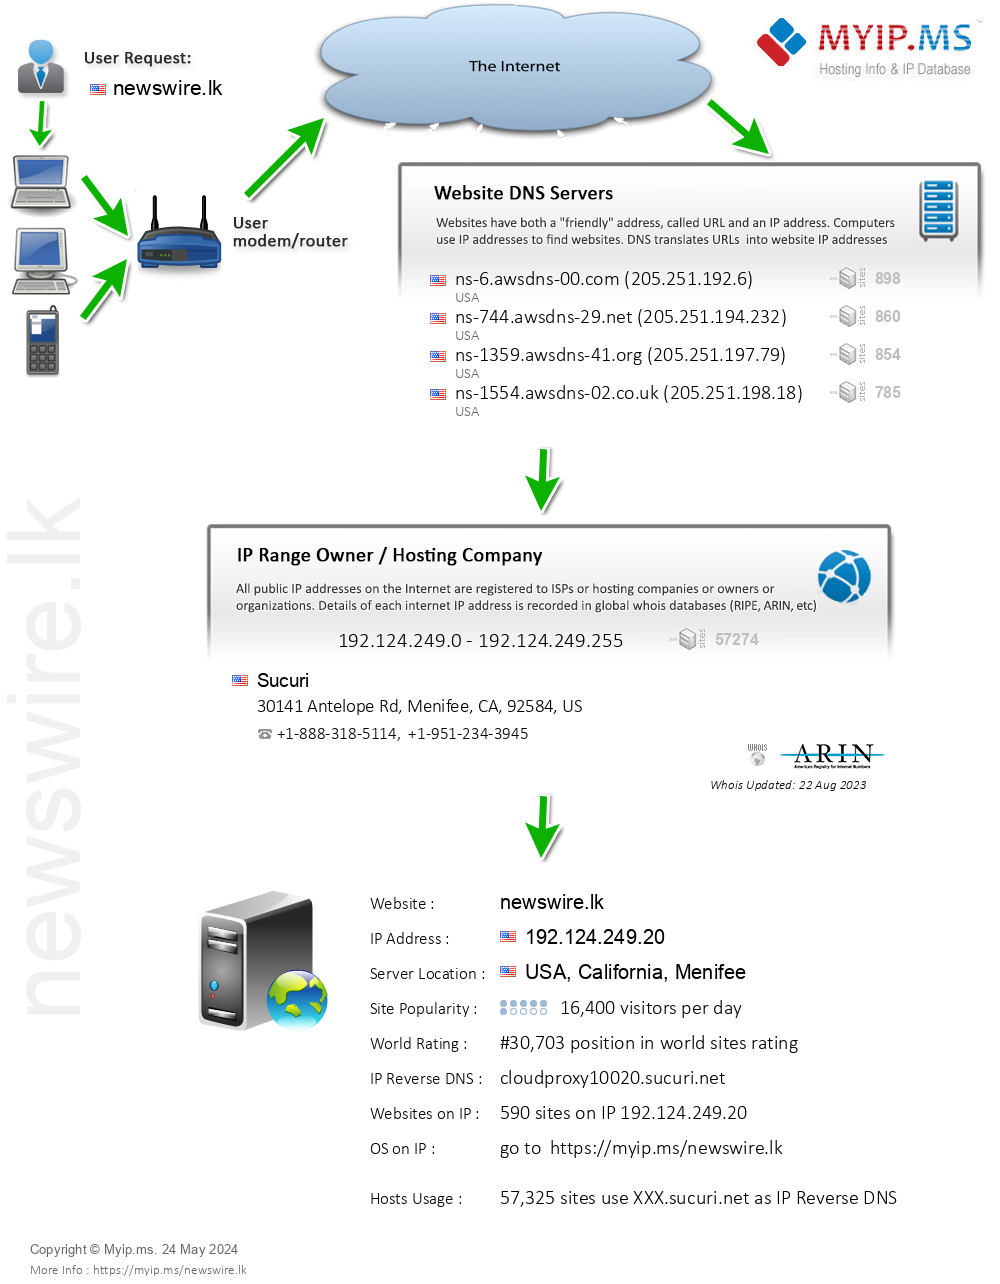 Newswire.lk - Website Hosting Visual IP Diagram